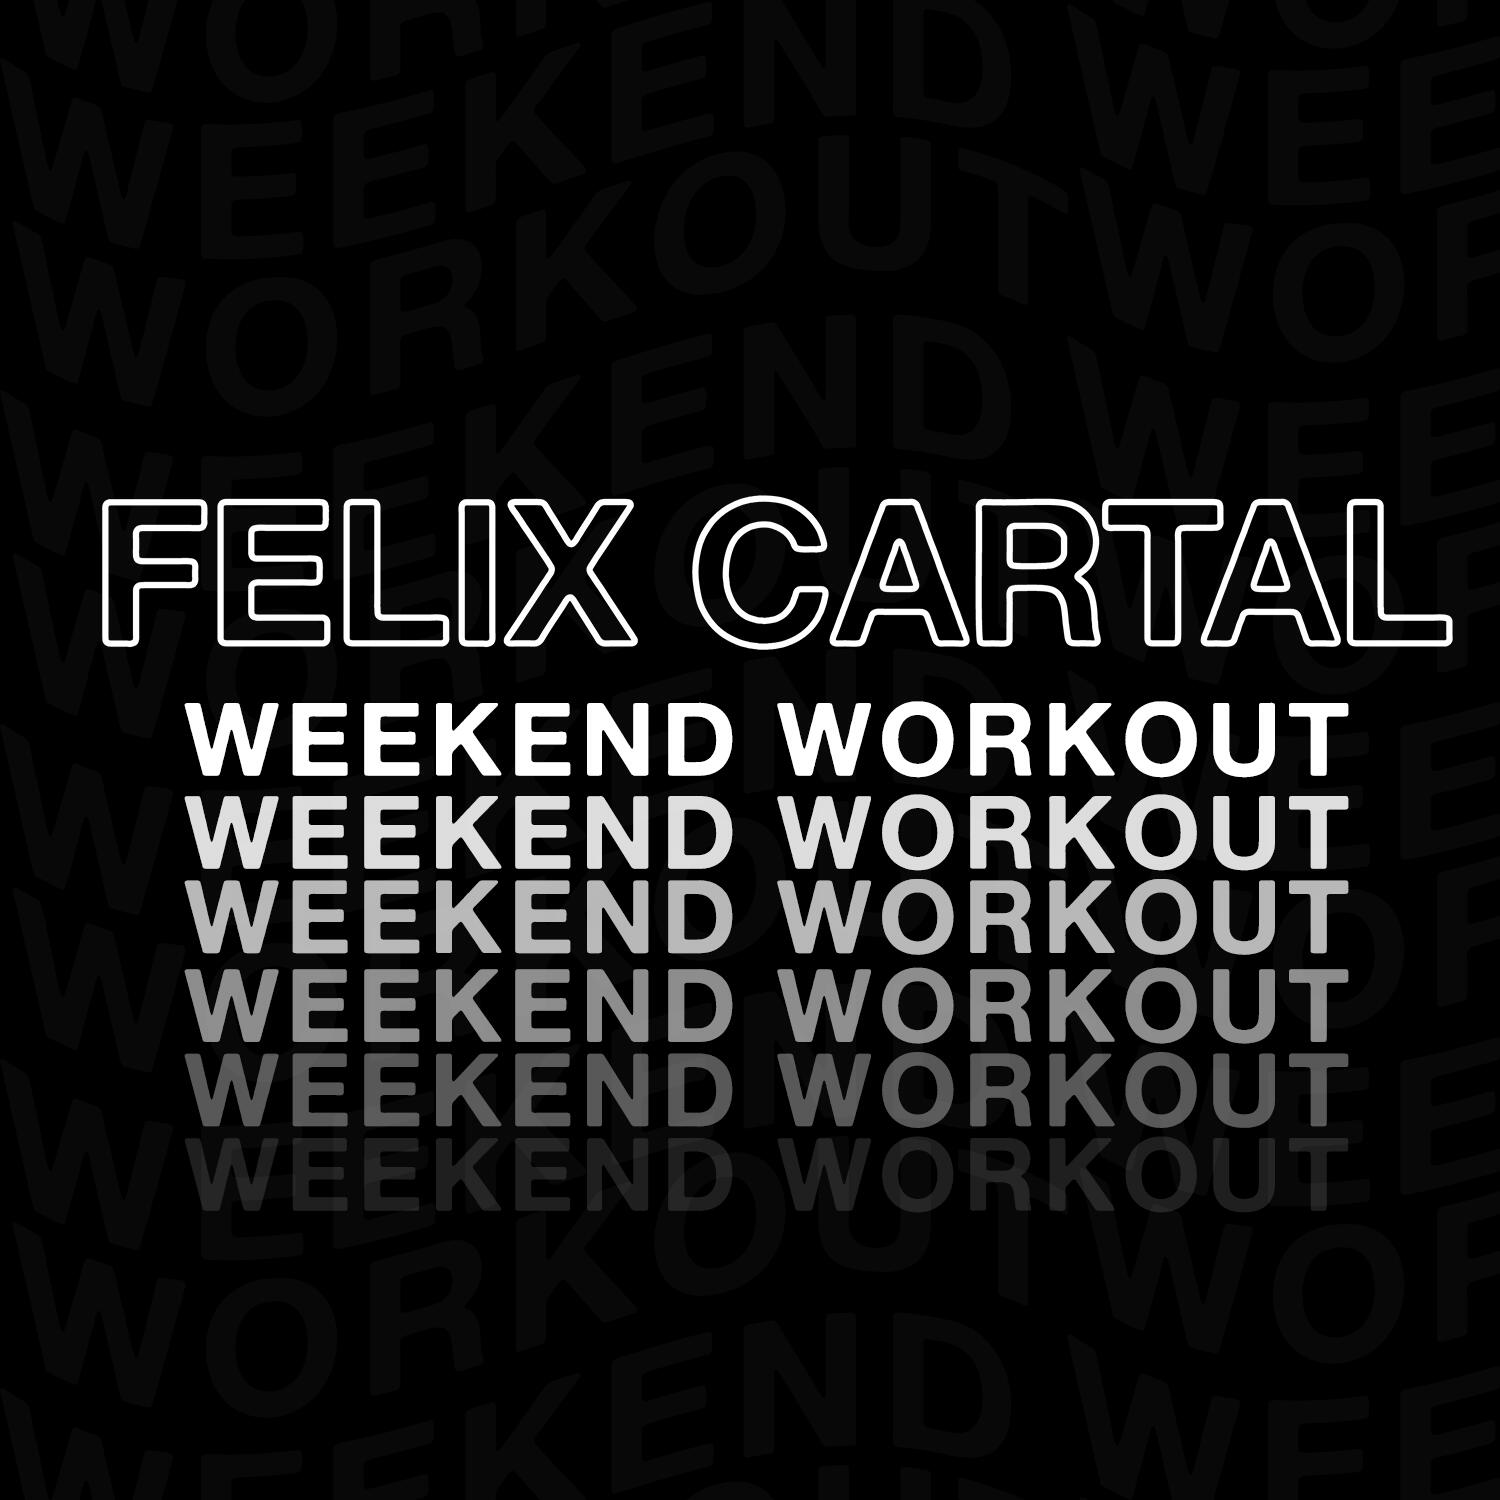 Weekend walker. House every weekend Workout. Cartal.